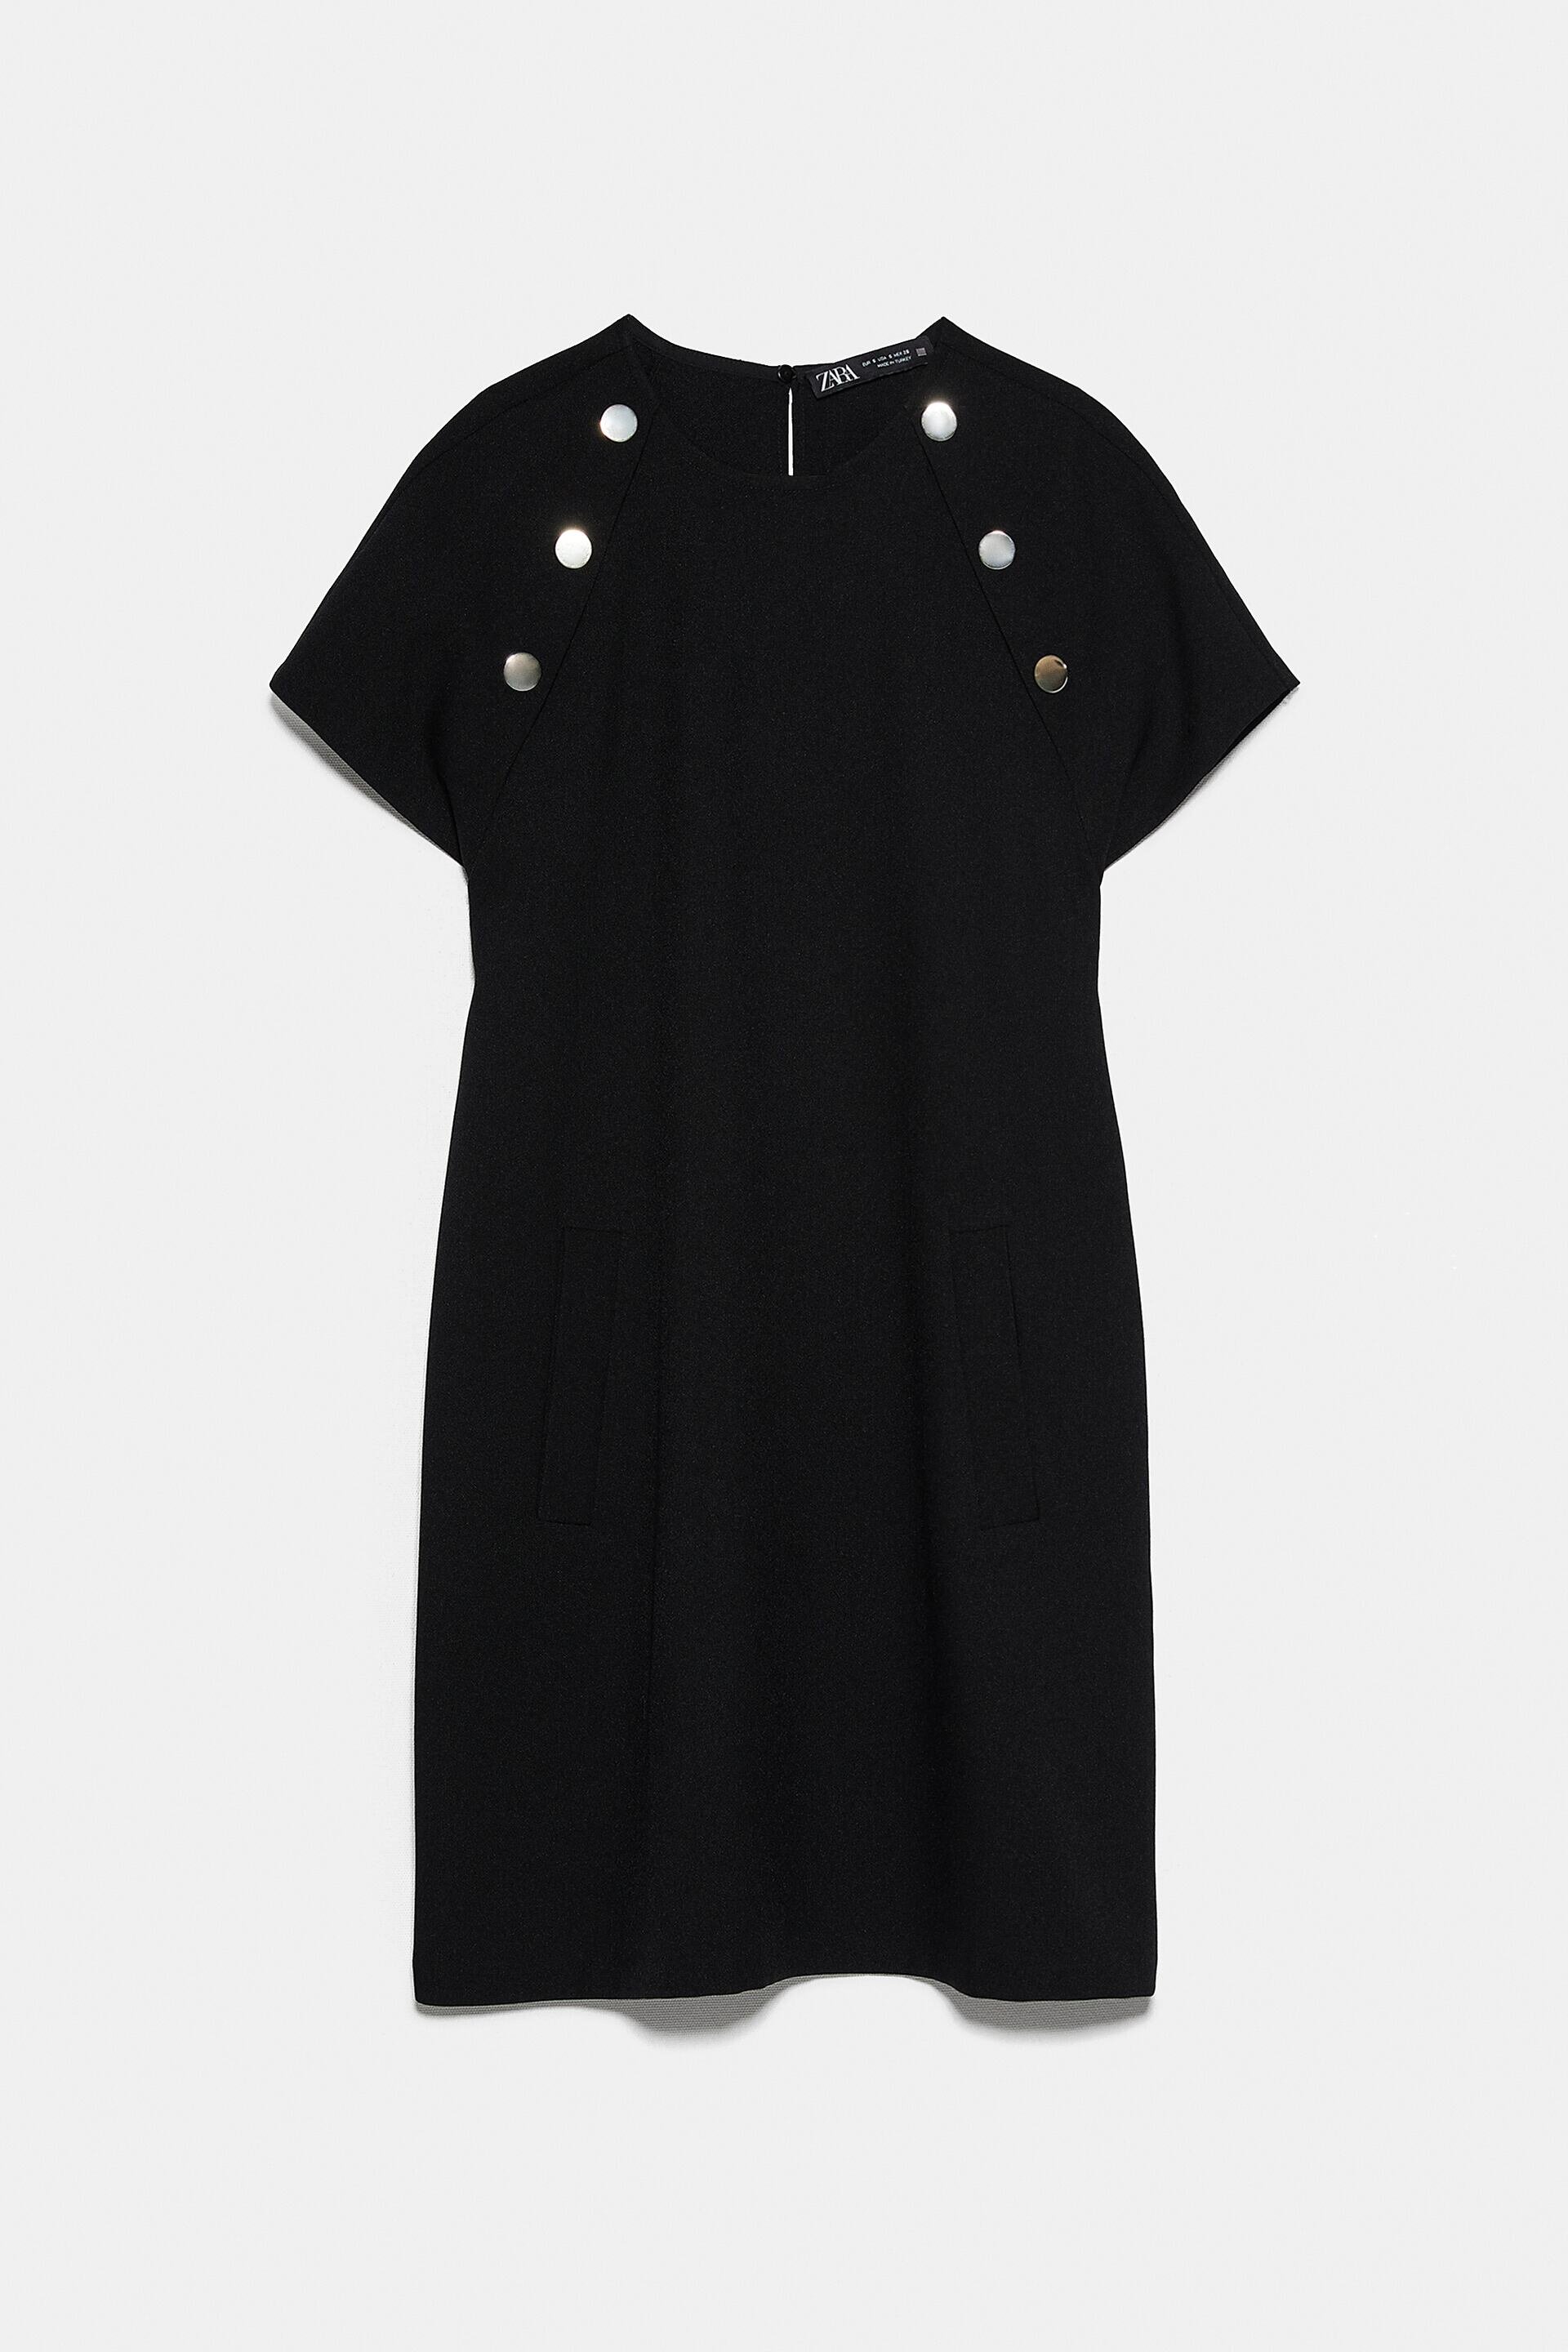 zara black dress with buttons